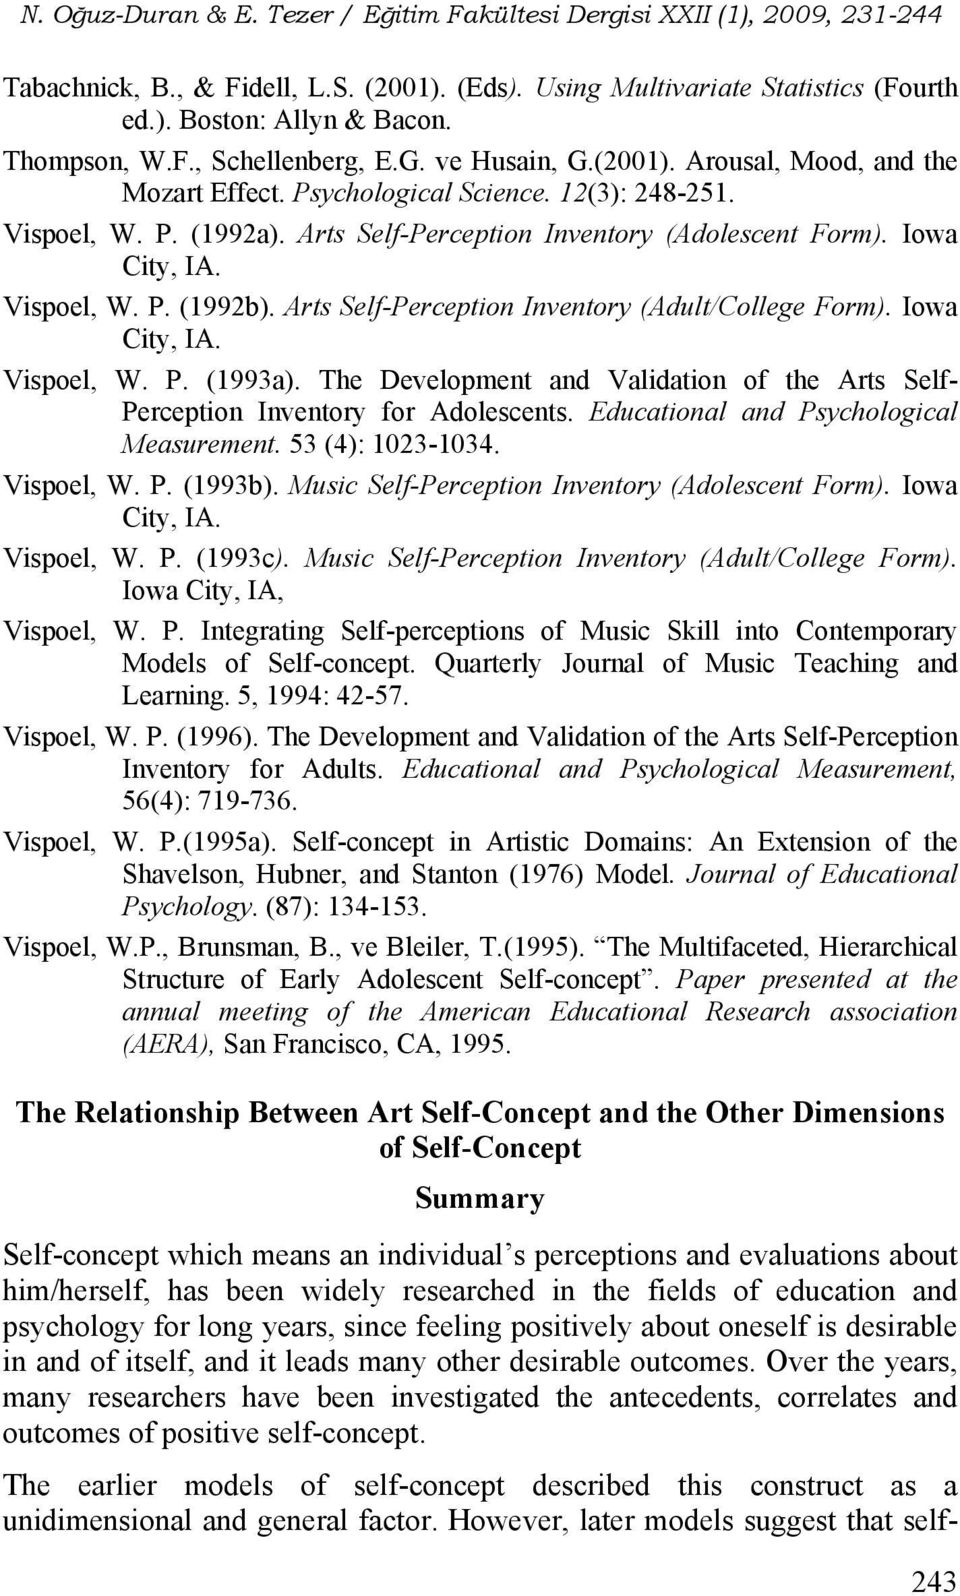 Arts Self-Perception Inventory (Adult/College Form). Iowa City, IA. Vispoel, W. P. (1993a). The Development and Validation of the Arts Self- Perception Inventory for Adolescents.